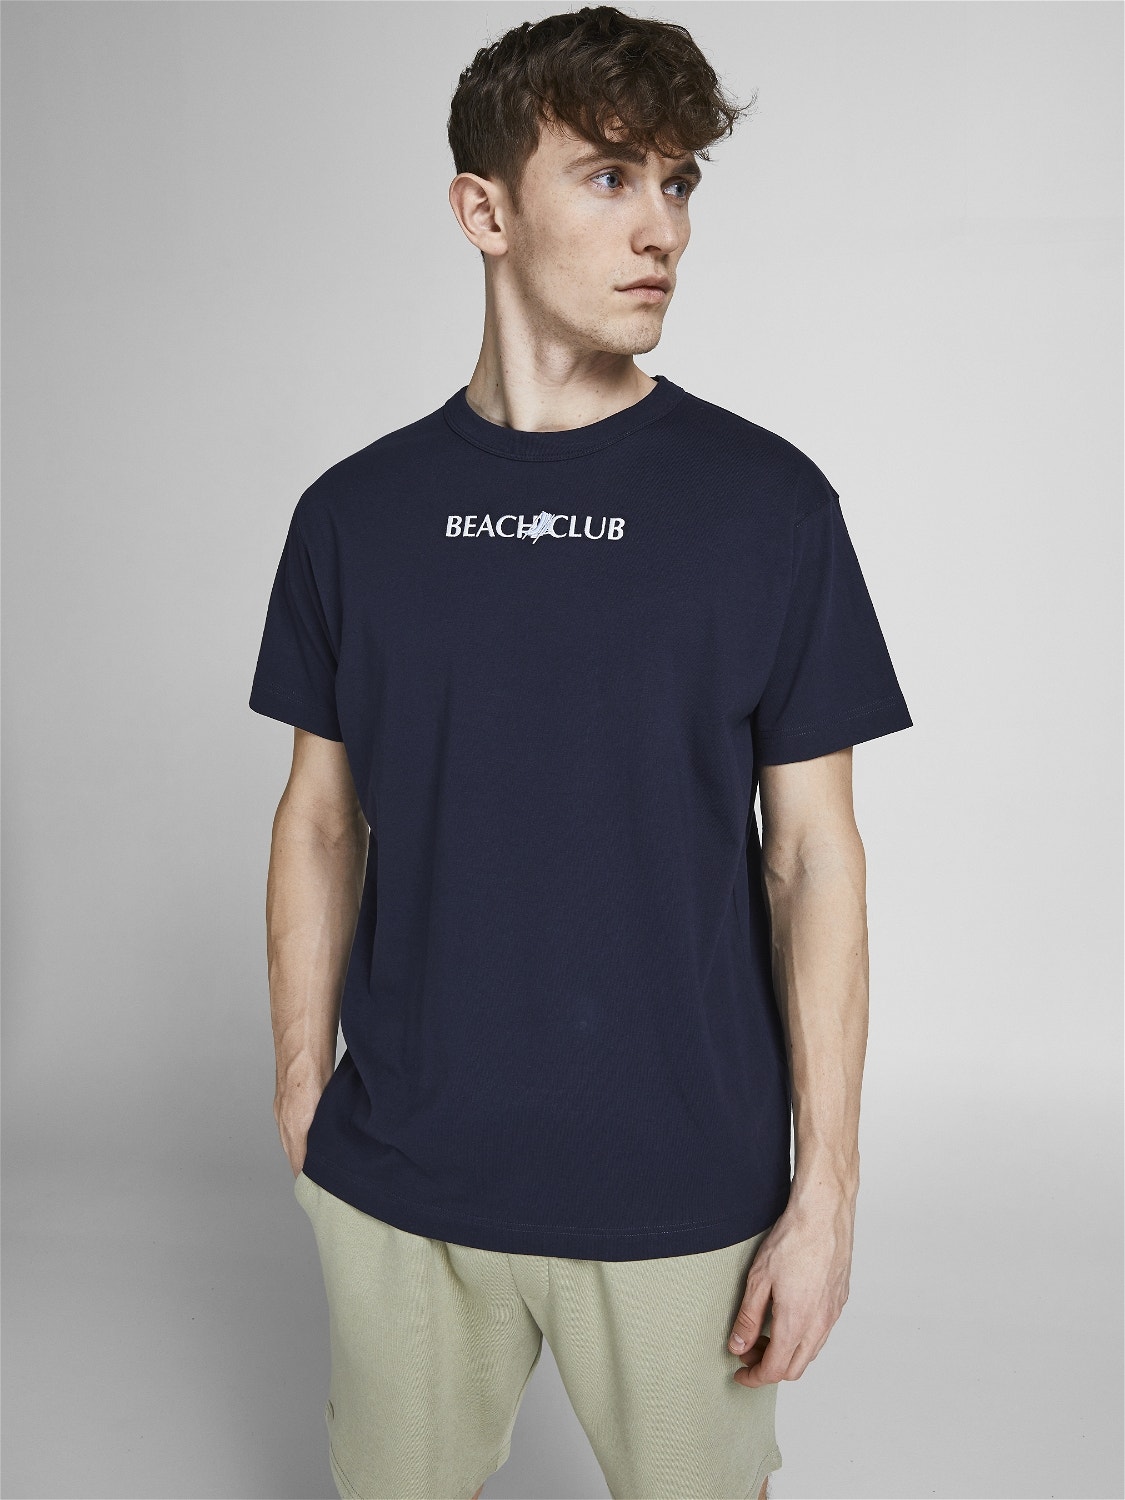 Jack & Jones Text Crew neck T-shirt -Navy Blazer - 12209827